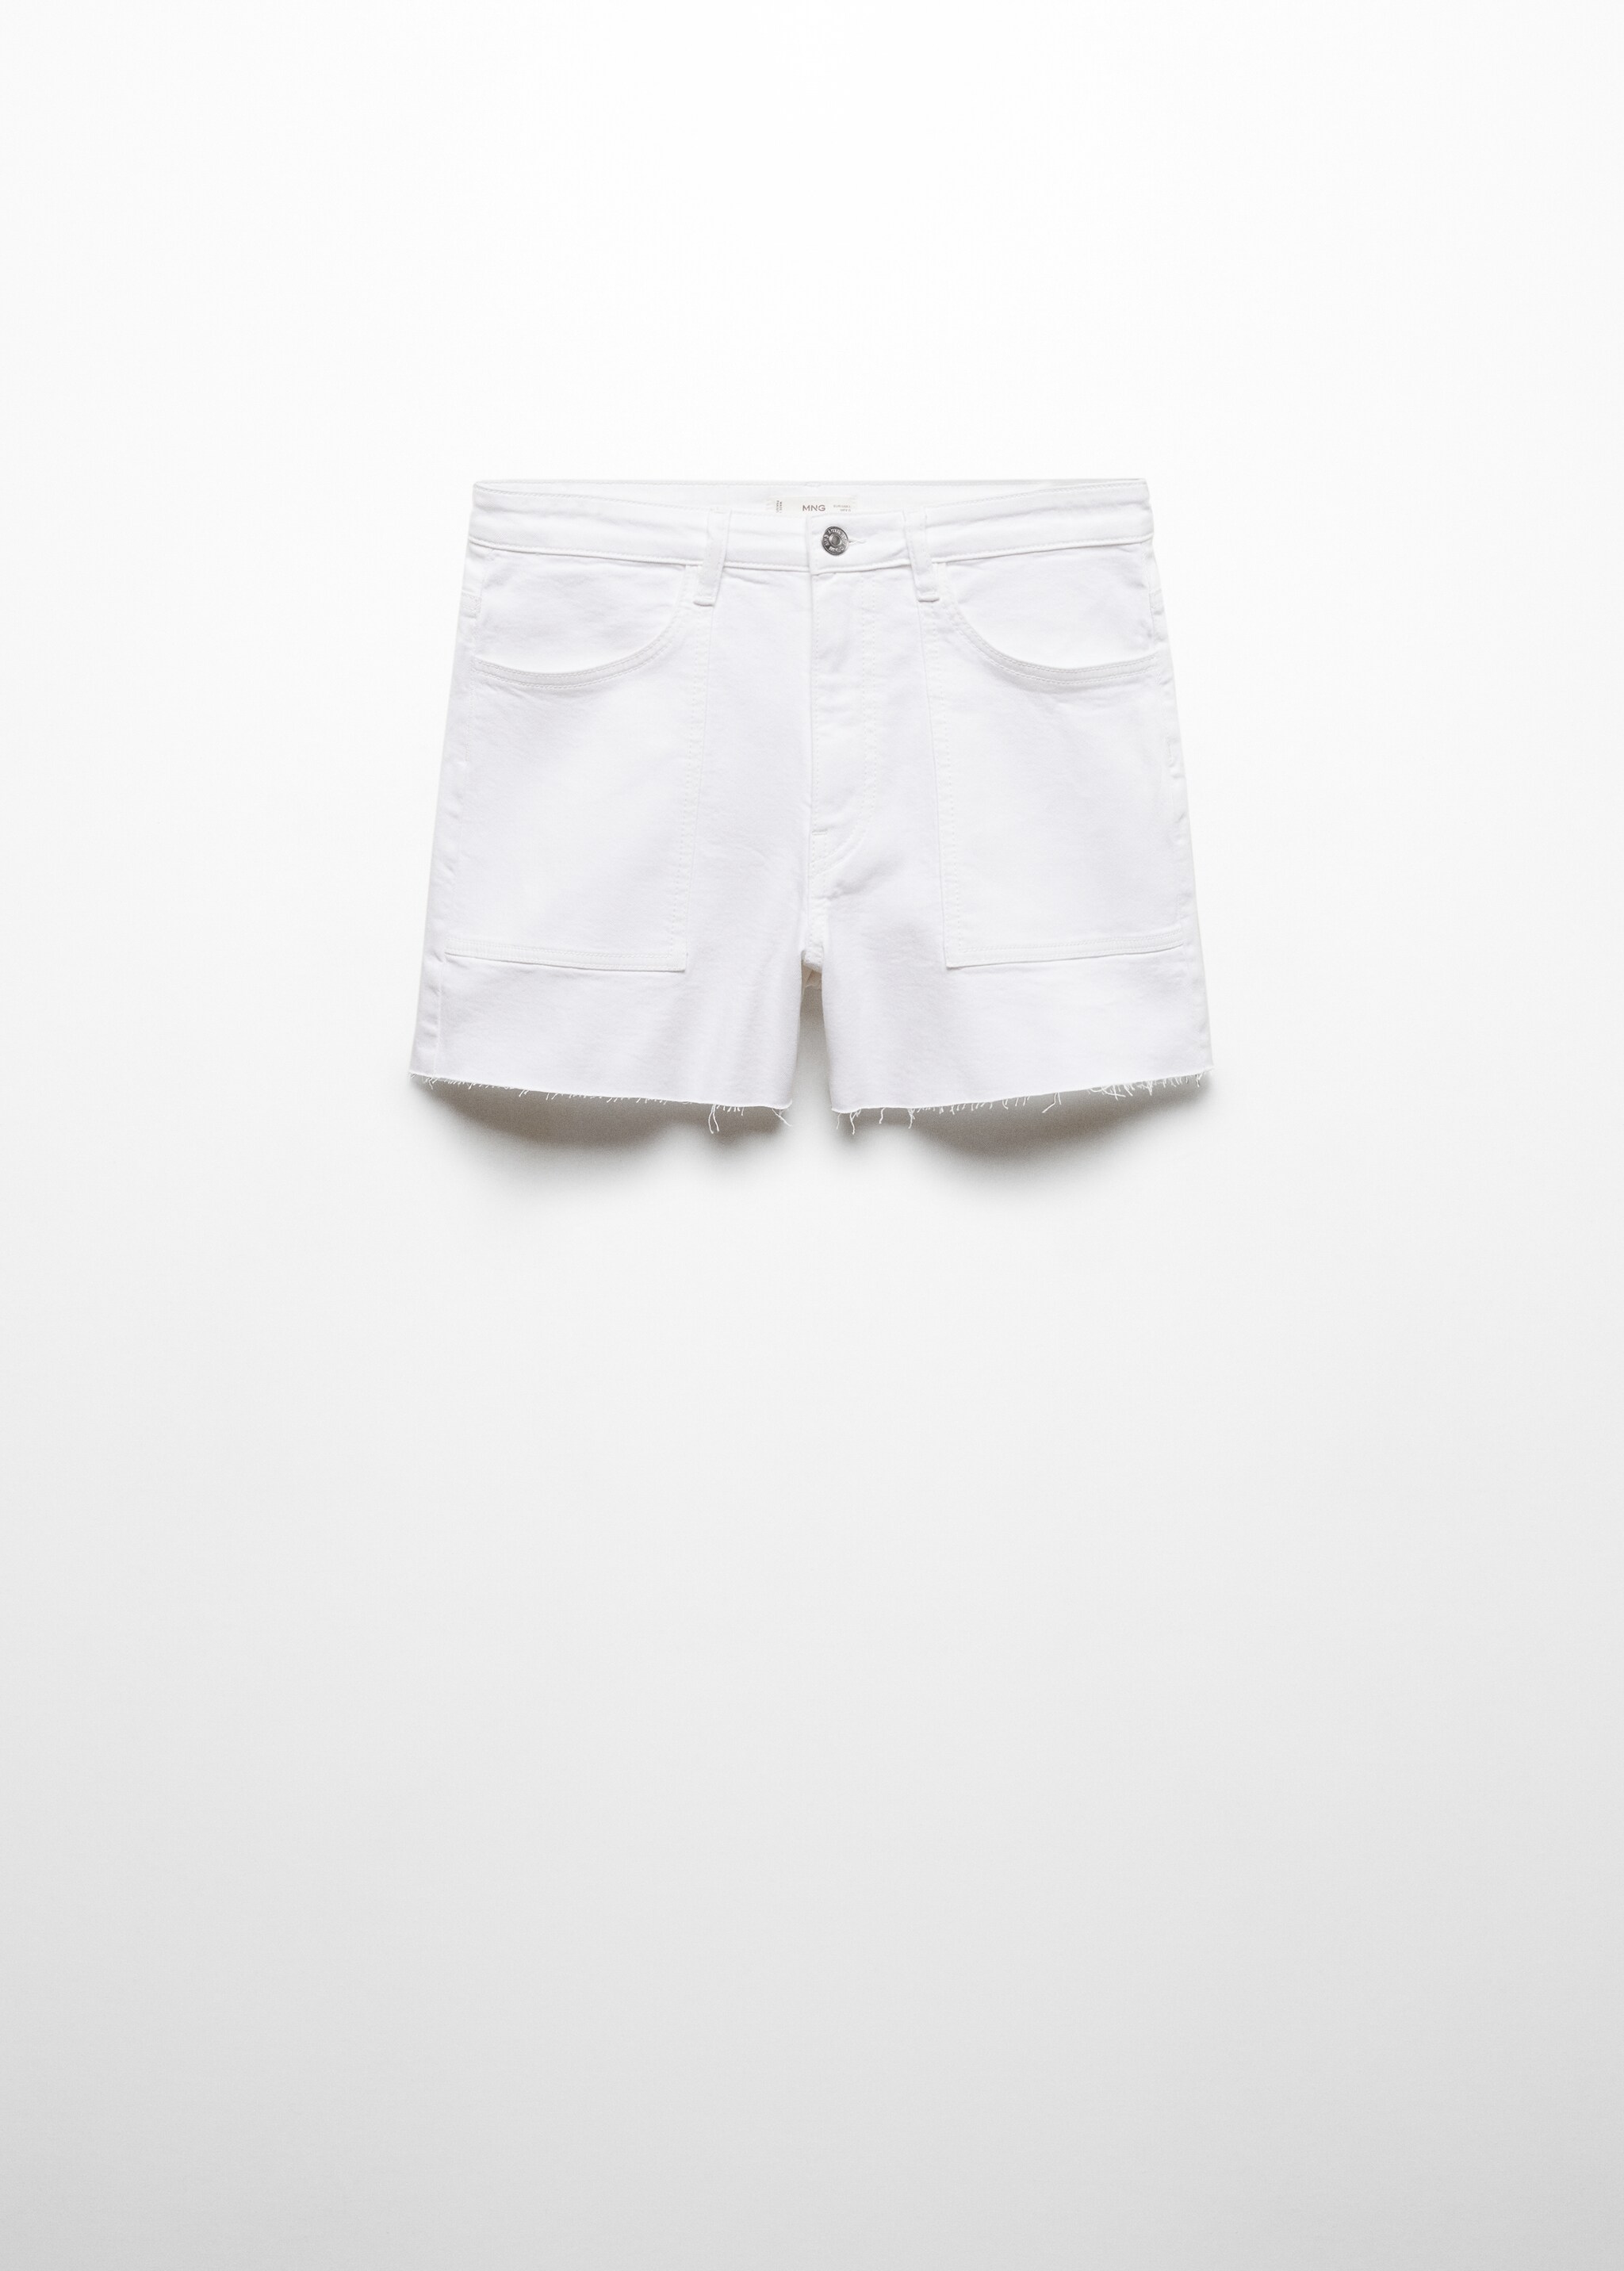 Medium-waist denim shorts - Article without model